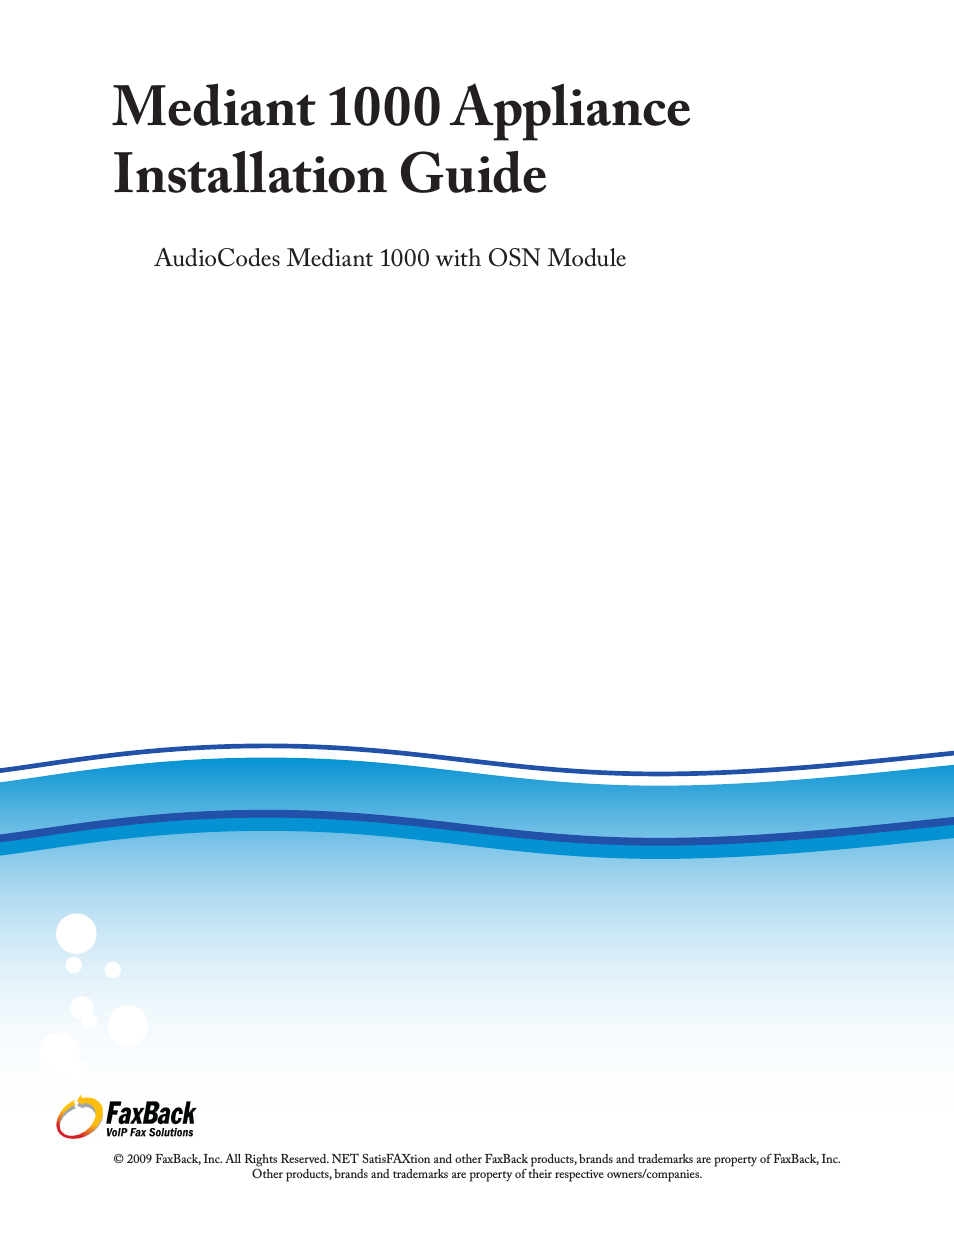 Mediant 1000 Appliance - Installation Guide